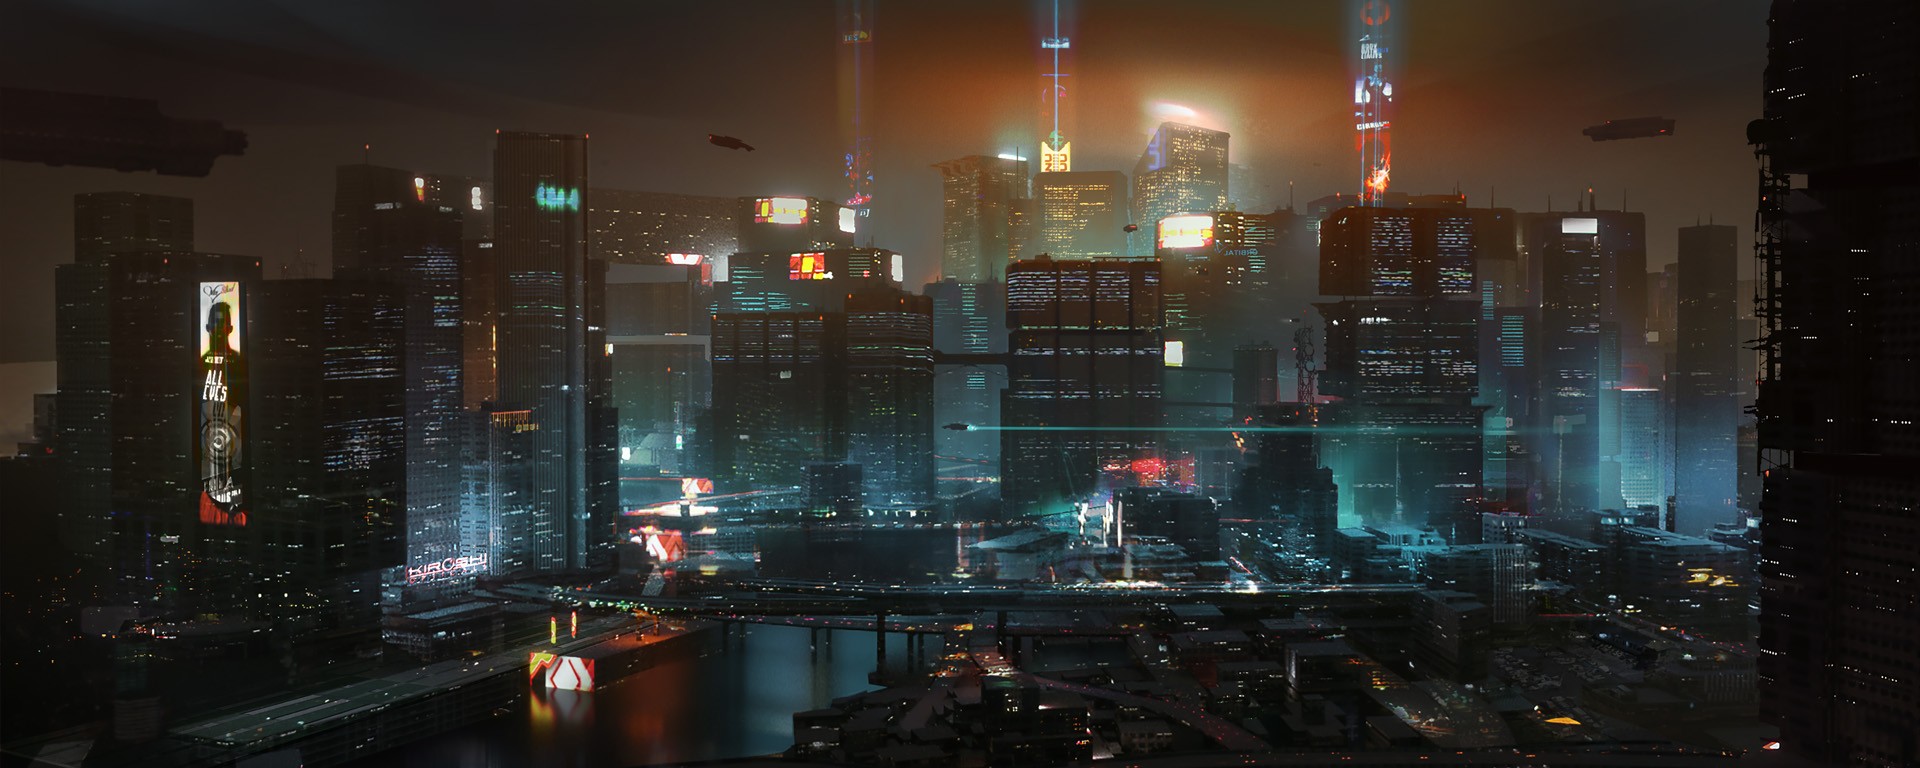 Night city cyberpunk rel фото 73